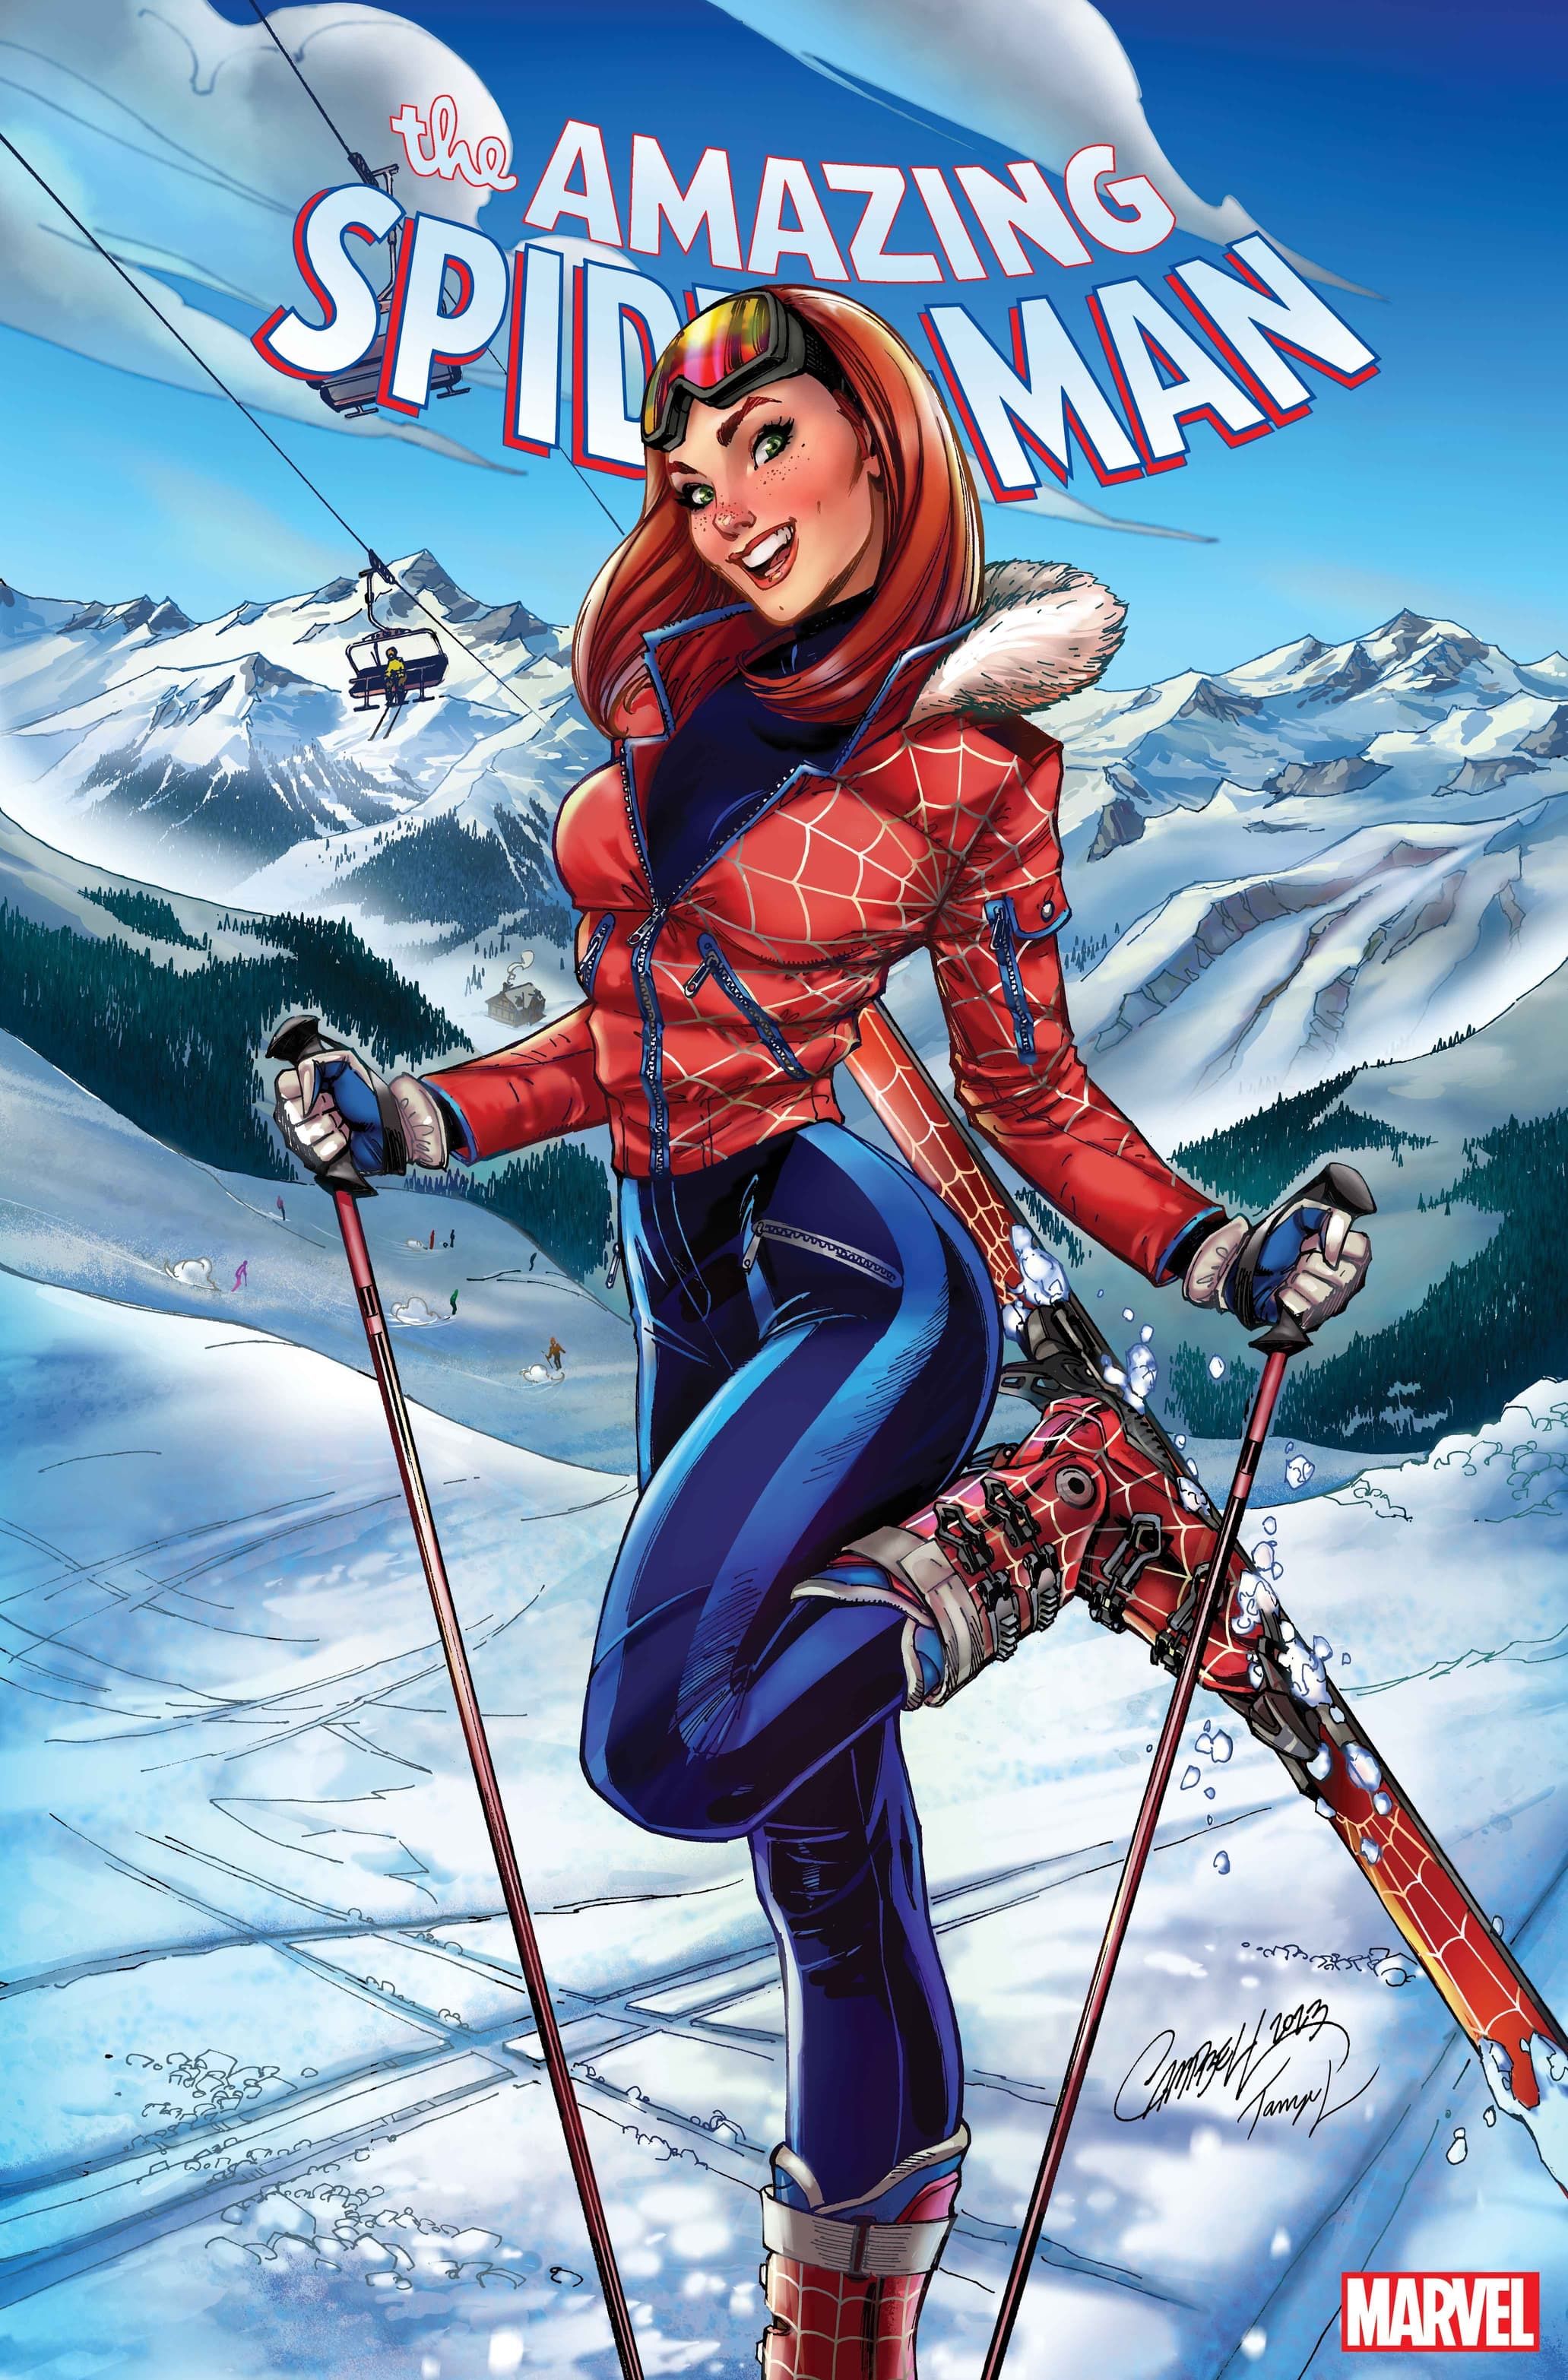 Spider-Woman & MJ Watson Showcase Their Winter Apparel in New Ski Chalet Art